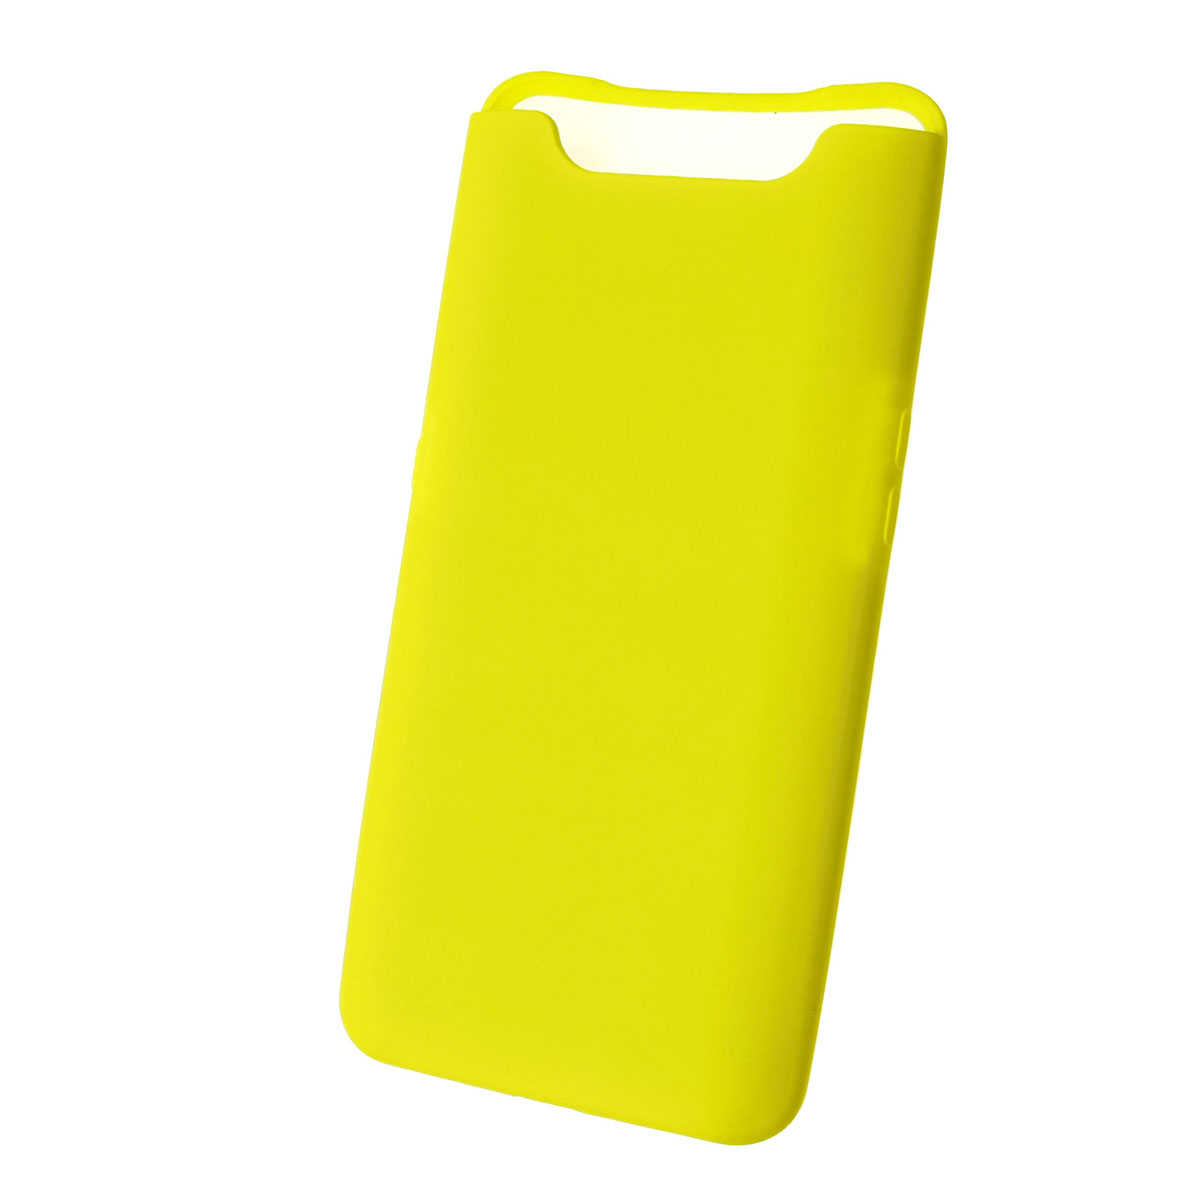 Чехол накладка Silicon Cover для Samsung A80 2019 (SM-A805), силикон, бархат, цвет ярко желтый.